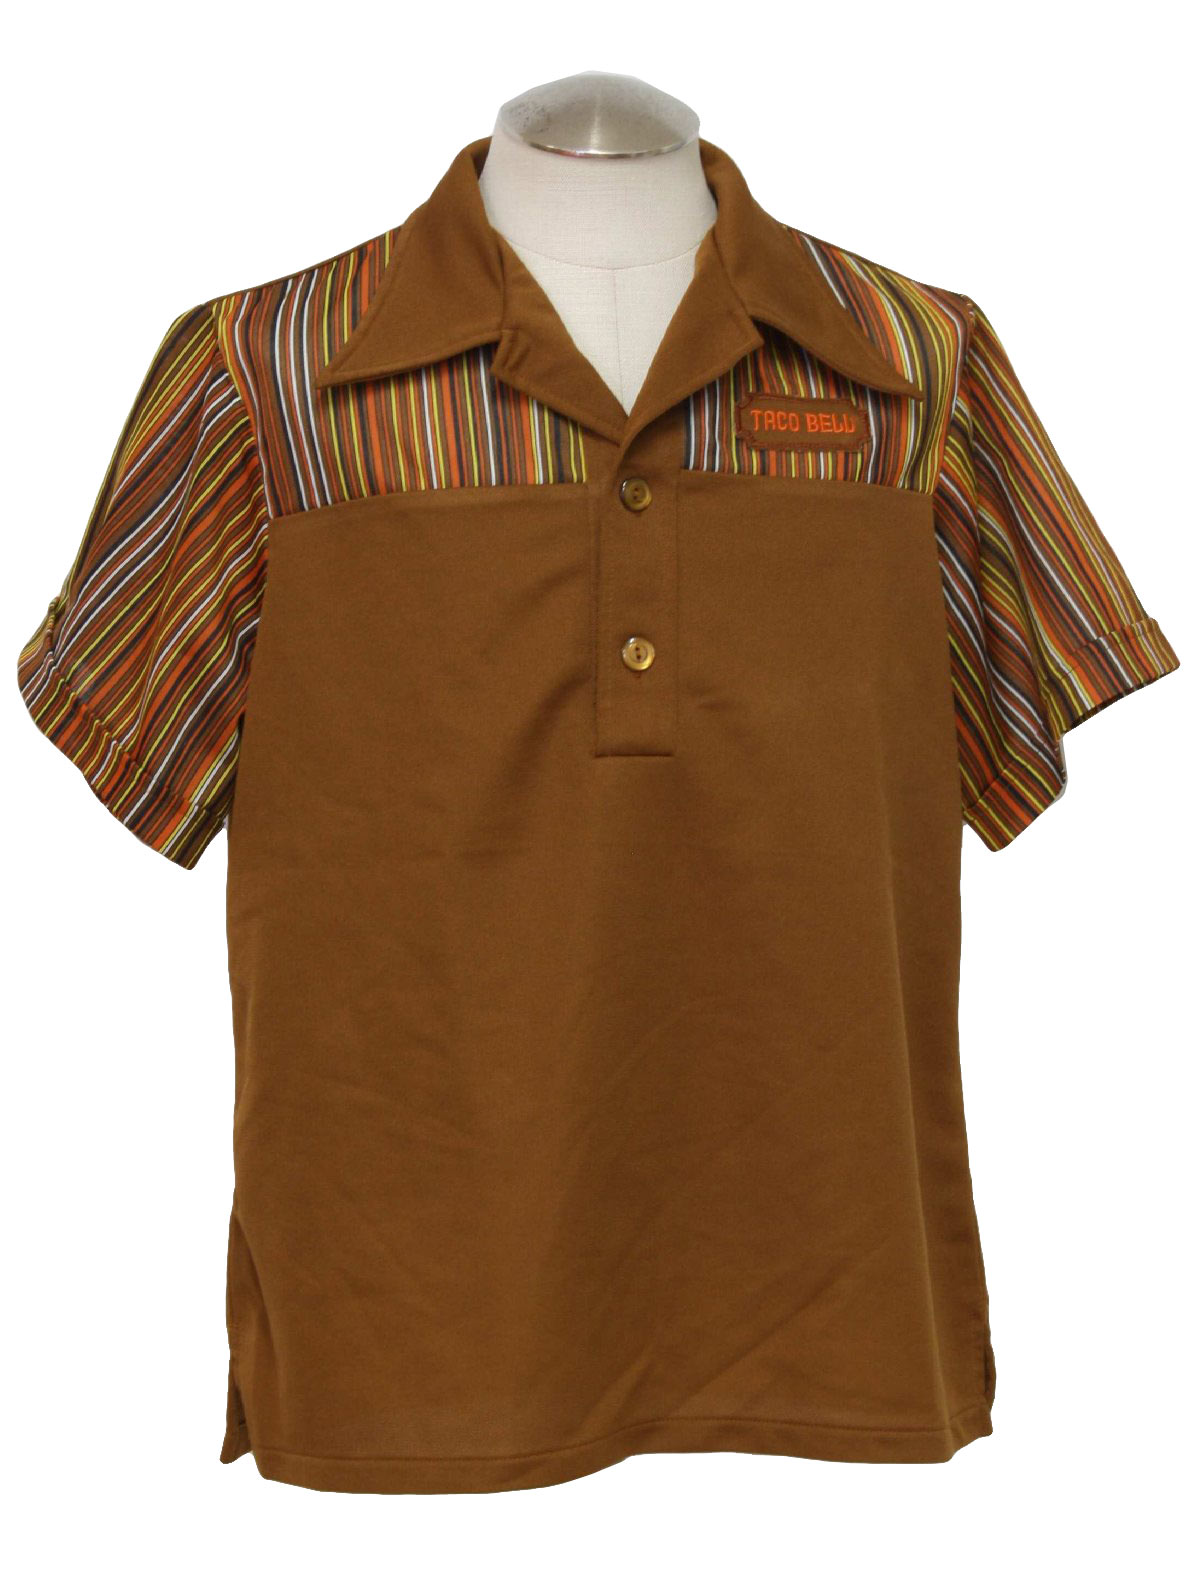 Seventies Boss Shirt: 70s -Boss- Mens saddle brown, orange, yellow